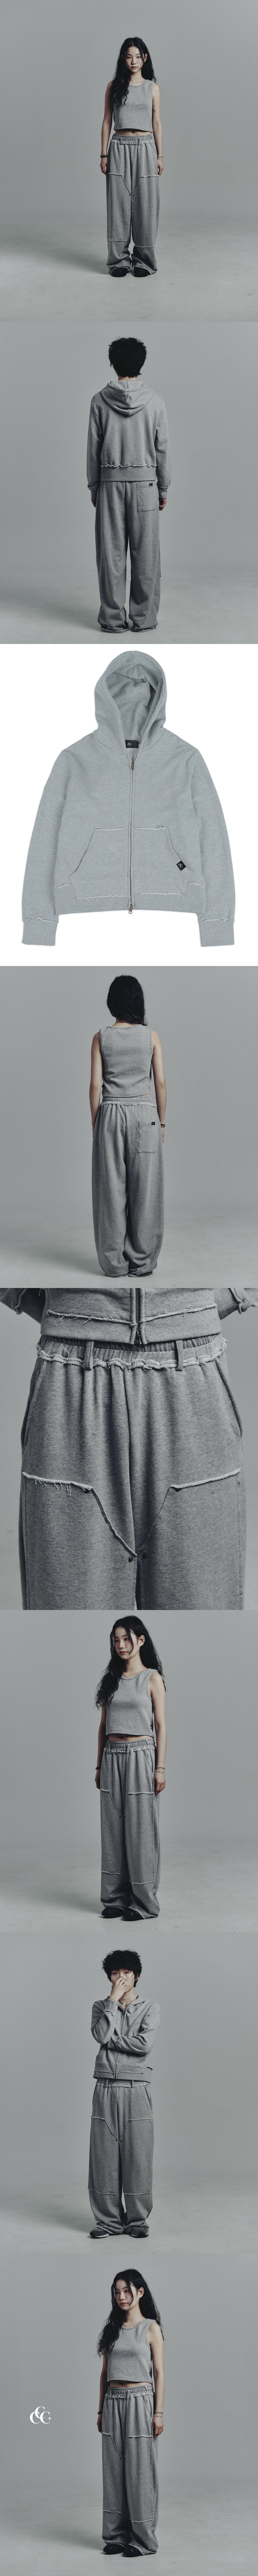 Grunge vintage set - up pants ( grey )